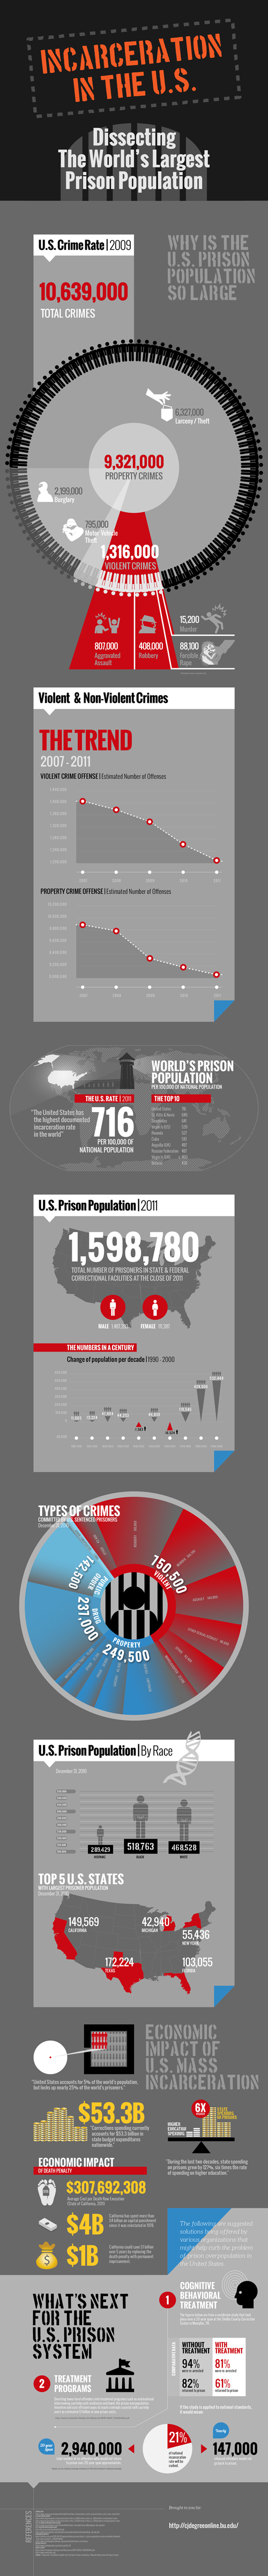 prison-demographics